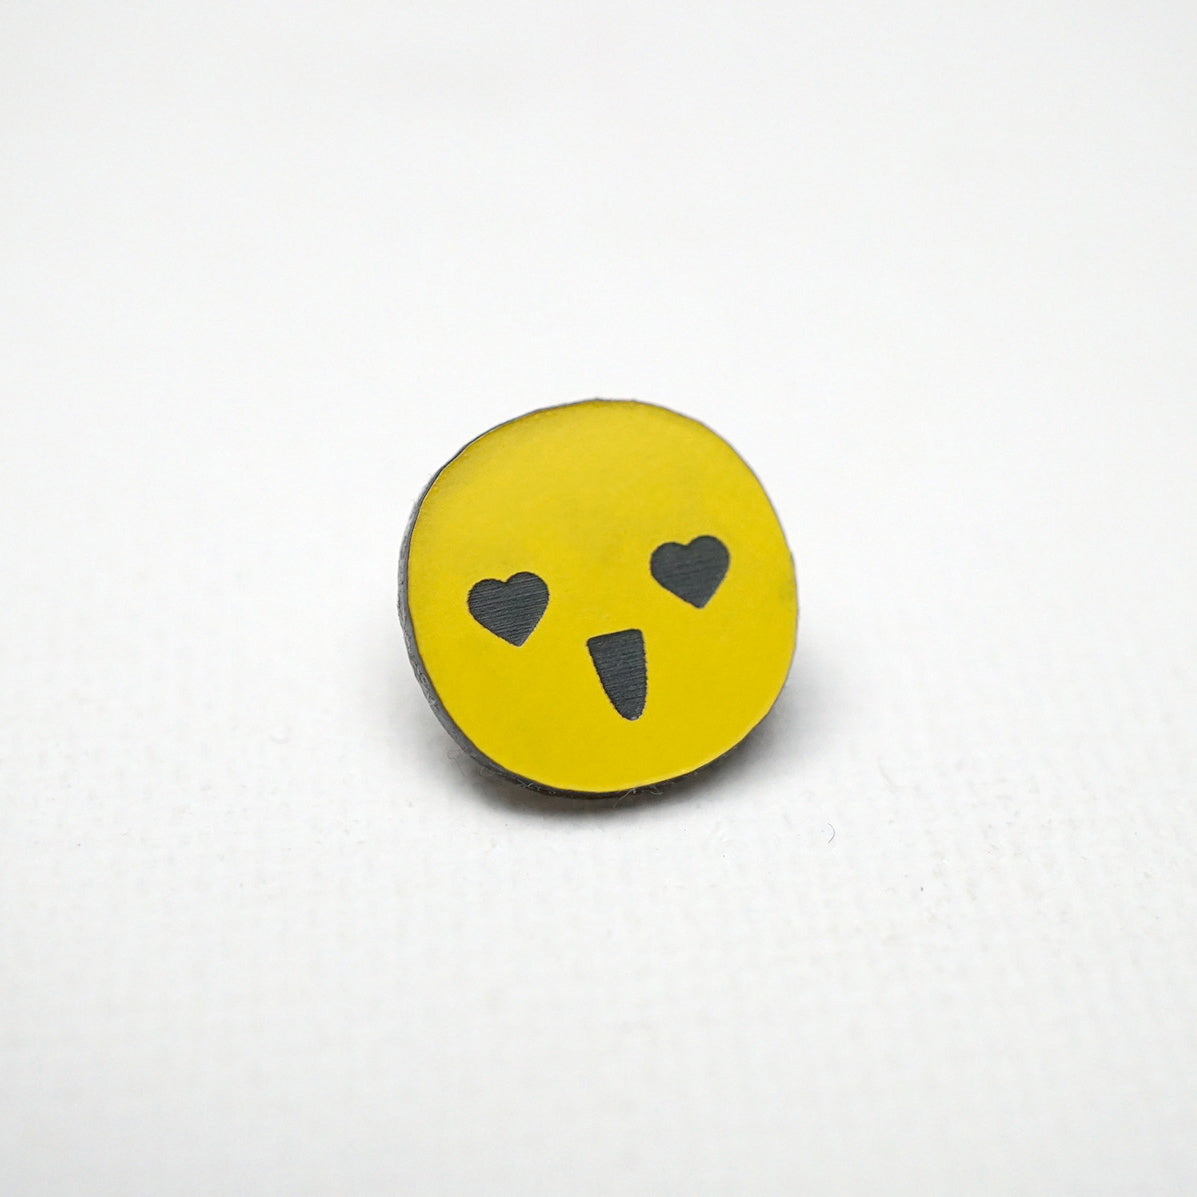 The Emoji Button